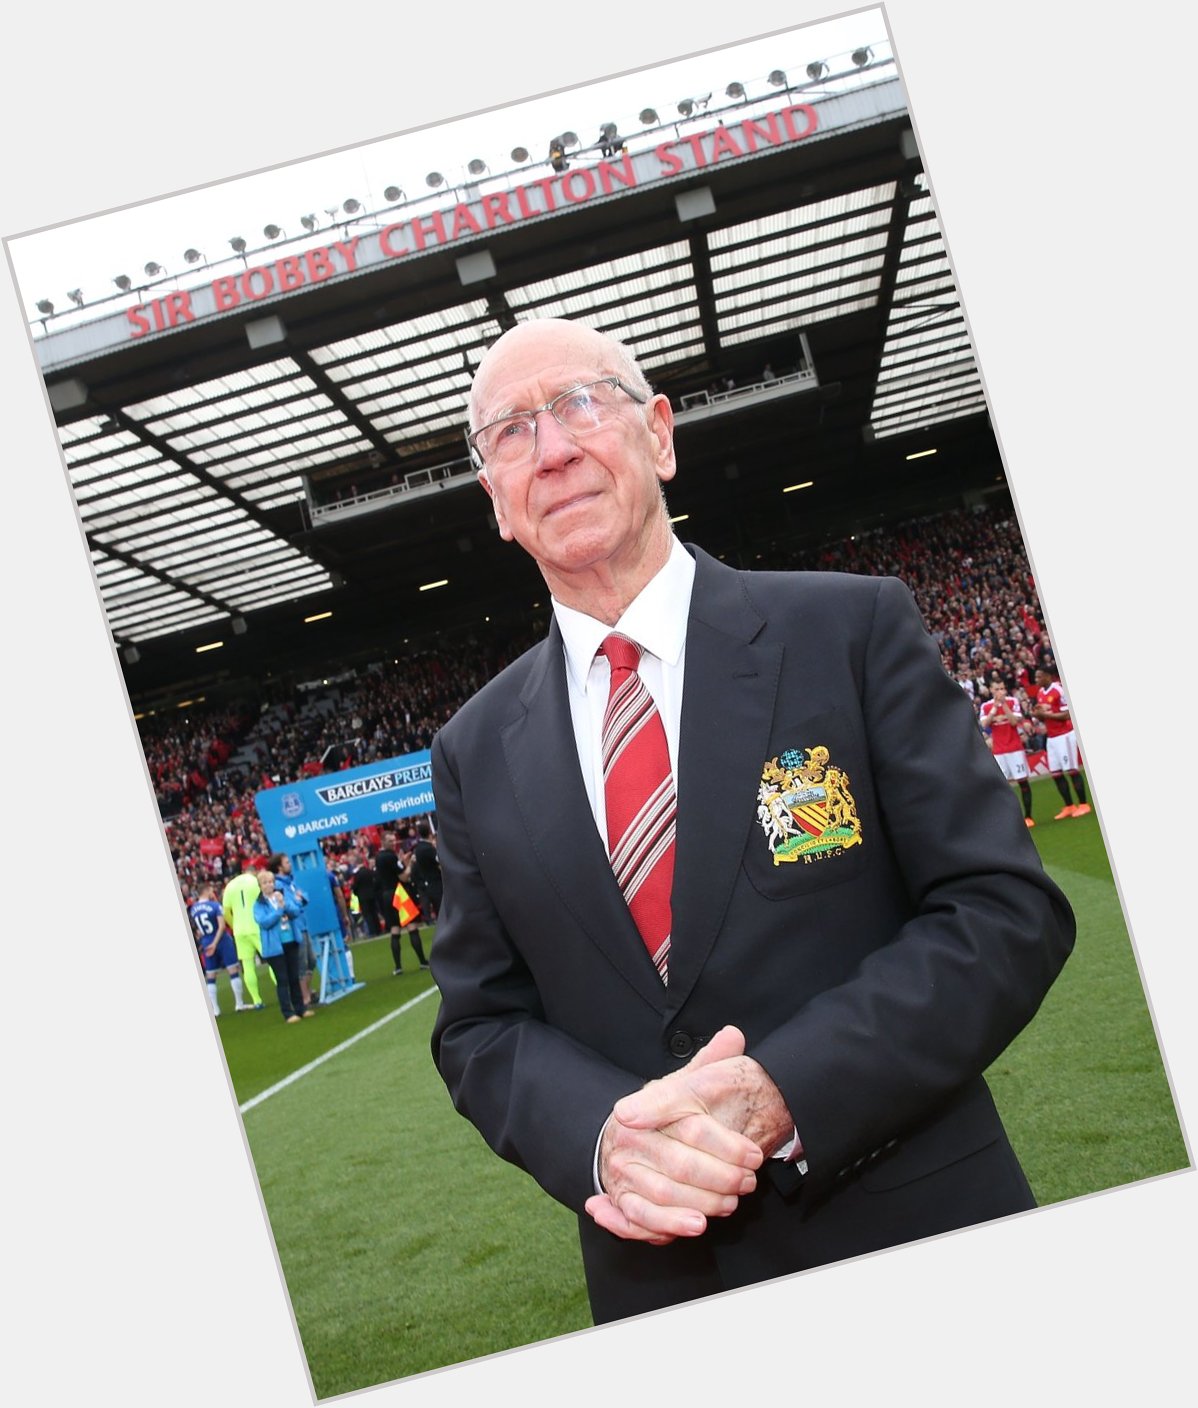 Wishing legend Sir Bobby Charlton a very happy 80th birthday today! 